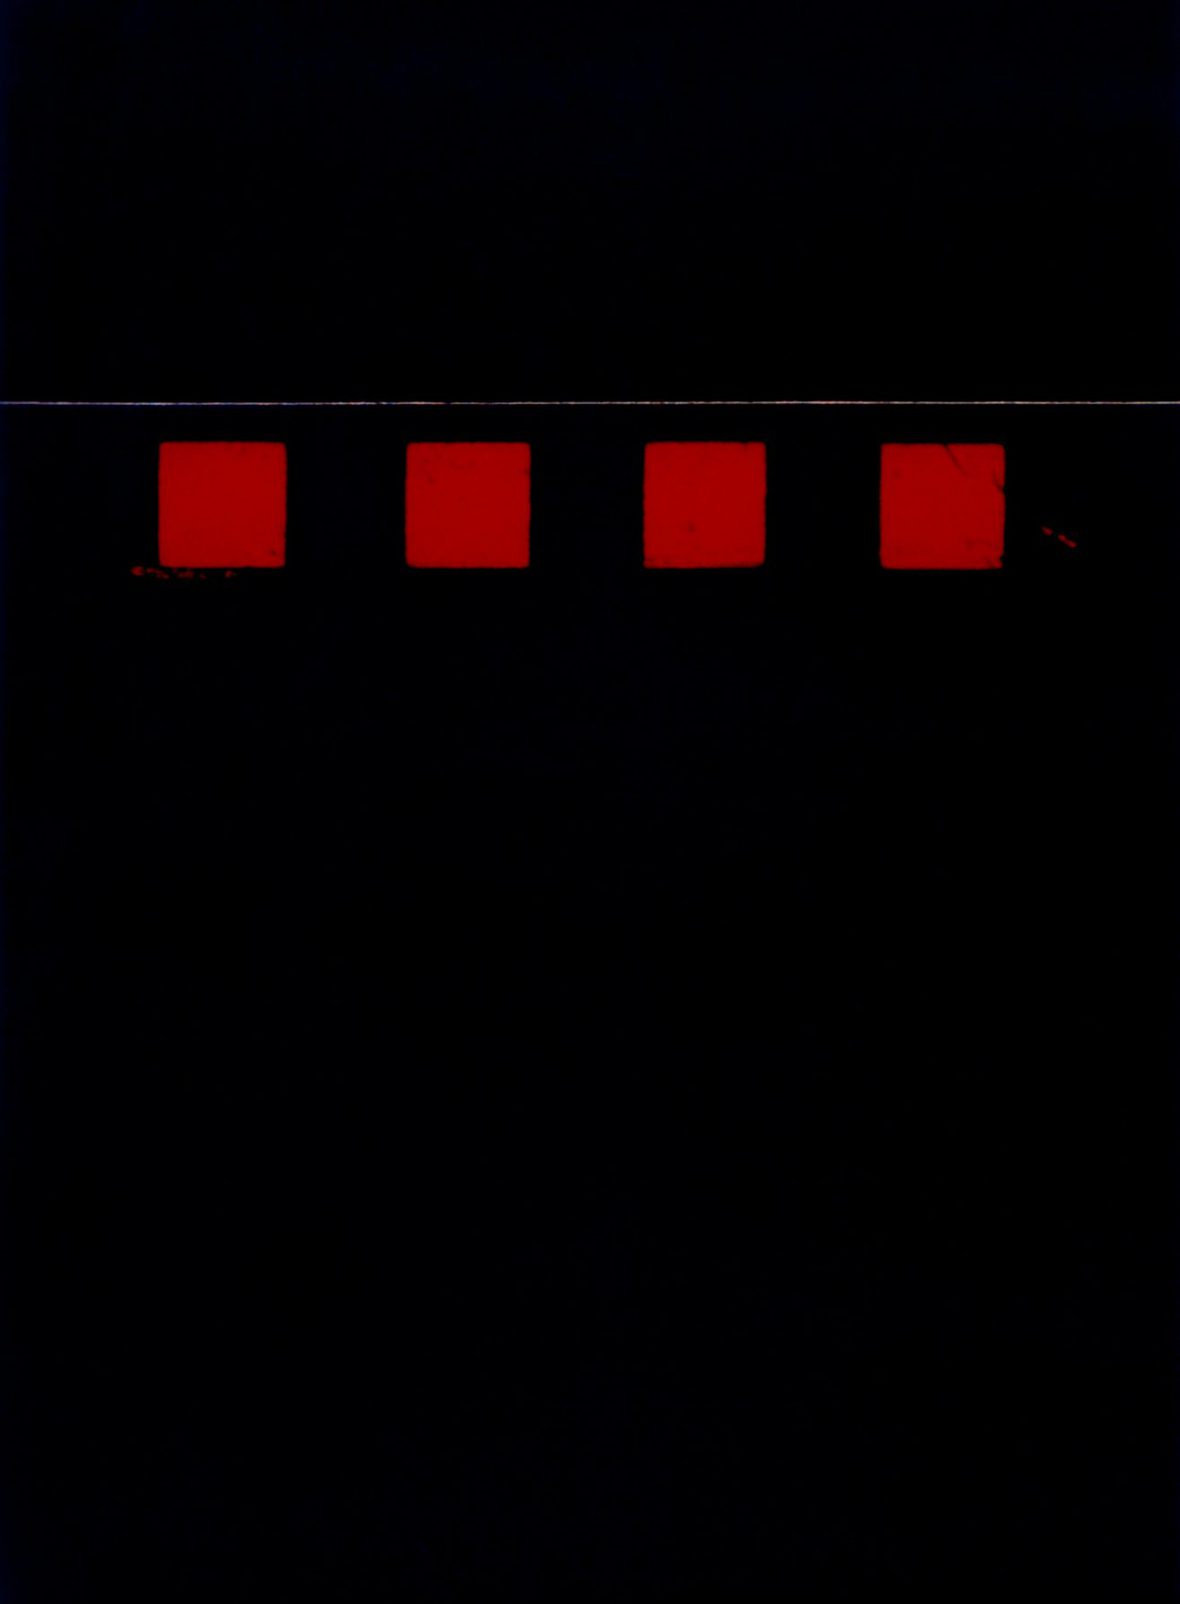 Ränder, 2003, C-print, 40cmx30cm, unique copy